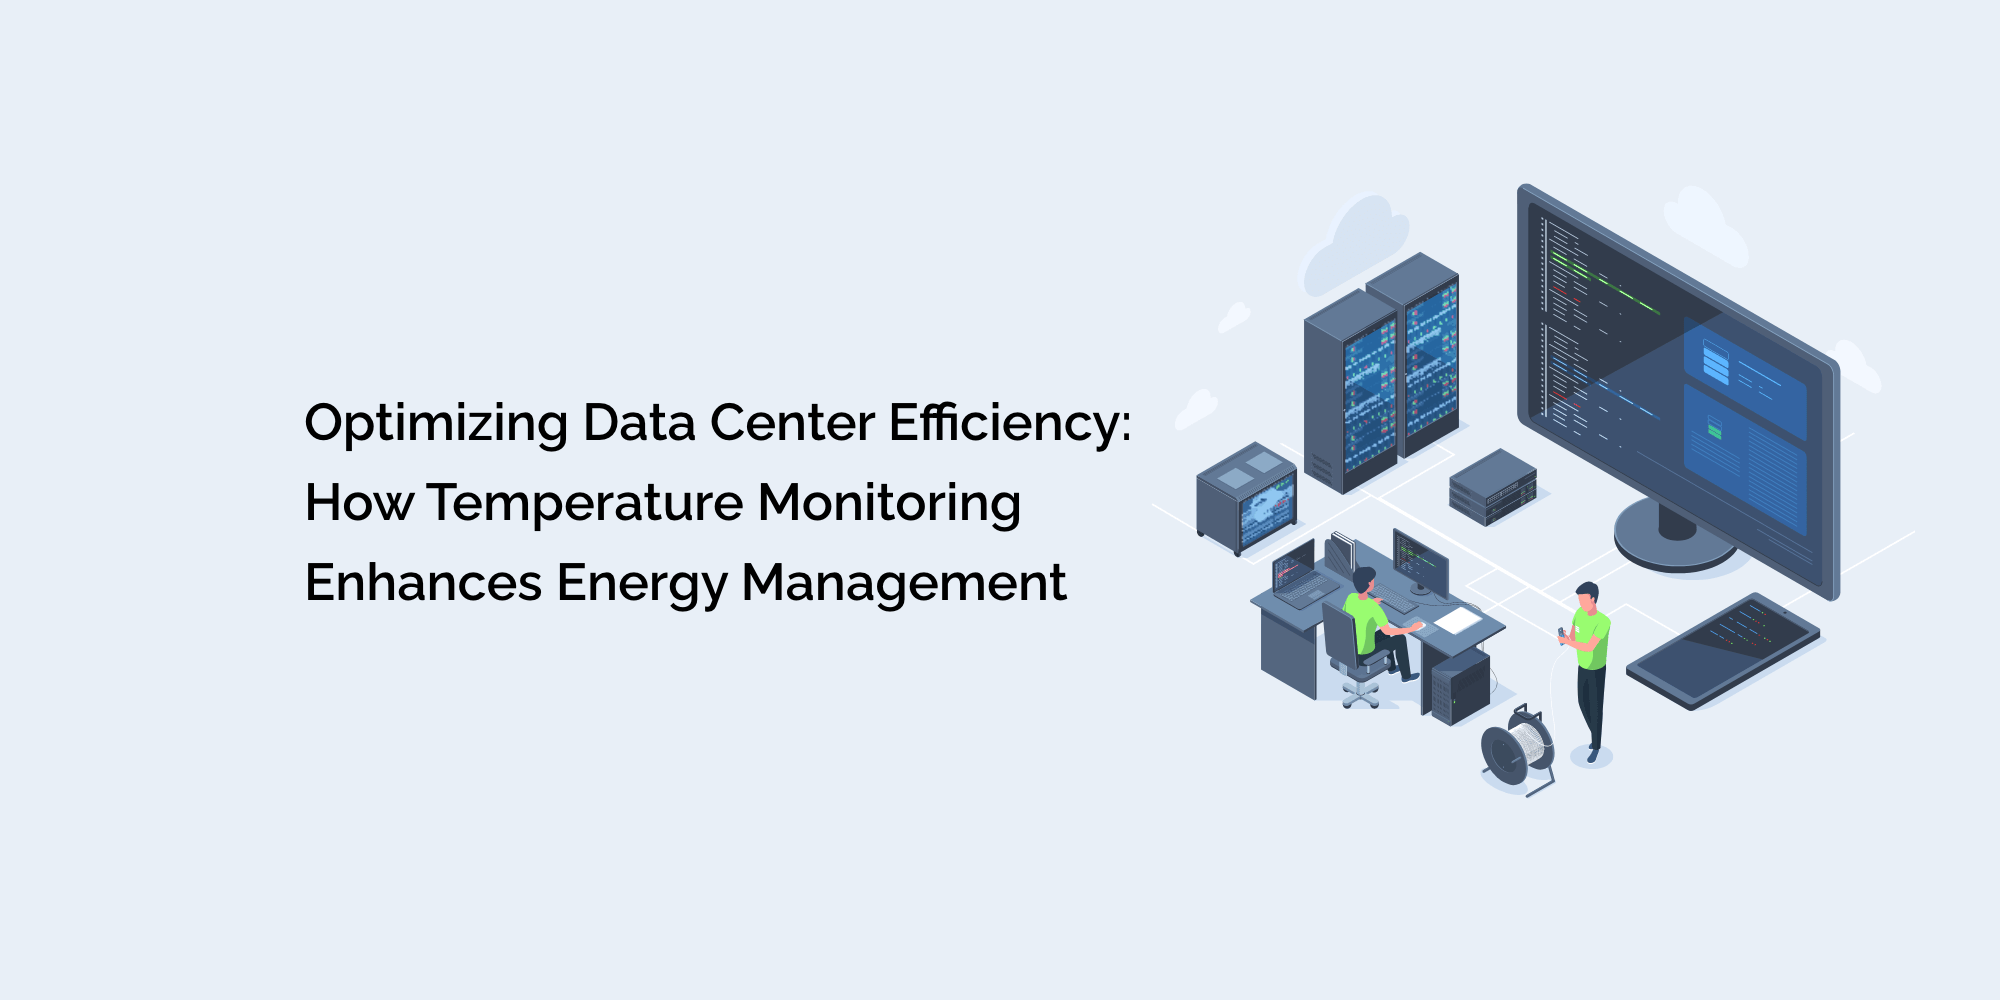 Optimizing Data Center Efficiency: How Temperature Monitoring Enhances Energy Management